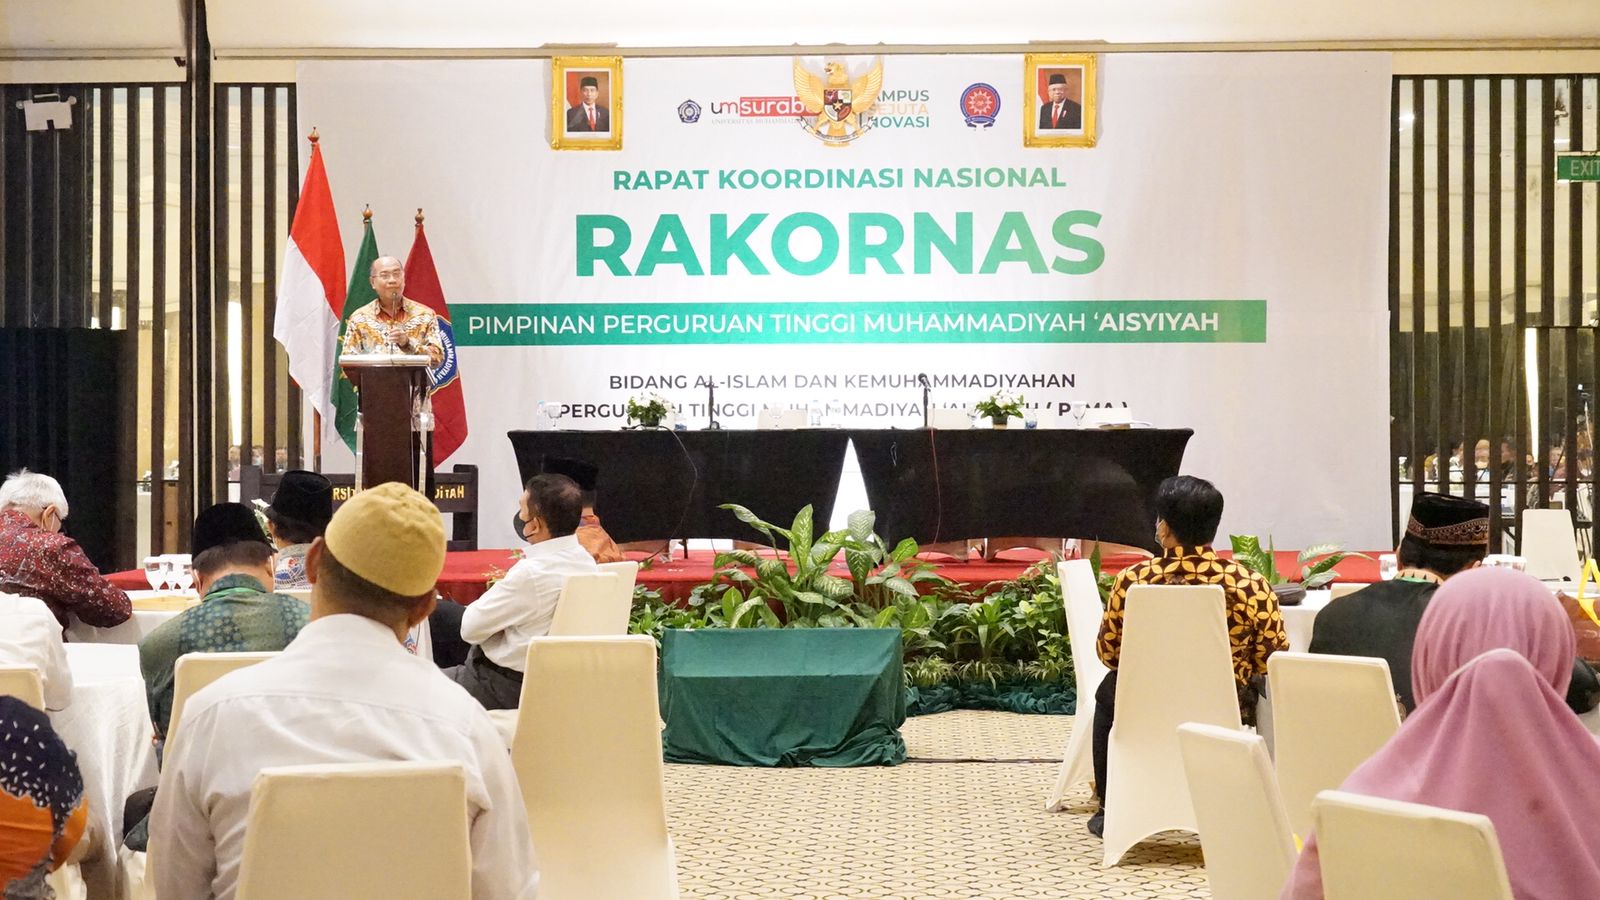 Sambutan penutup Rektor UM Surabaya, Dr dr Sukadiono MM